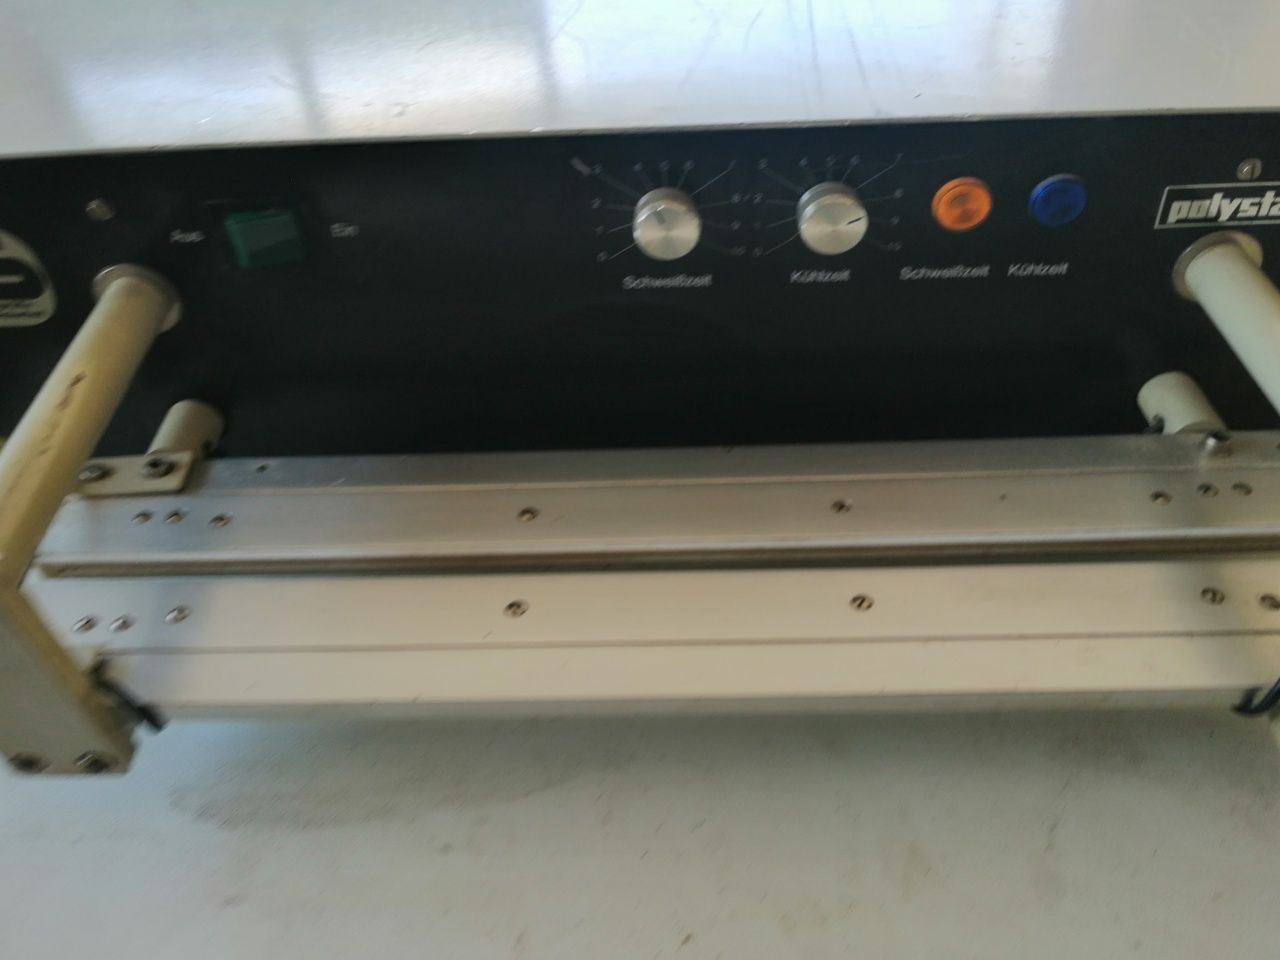 Polystar 401 hm машина за запечатване на полиетиленови фолиа